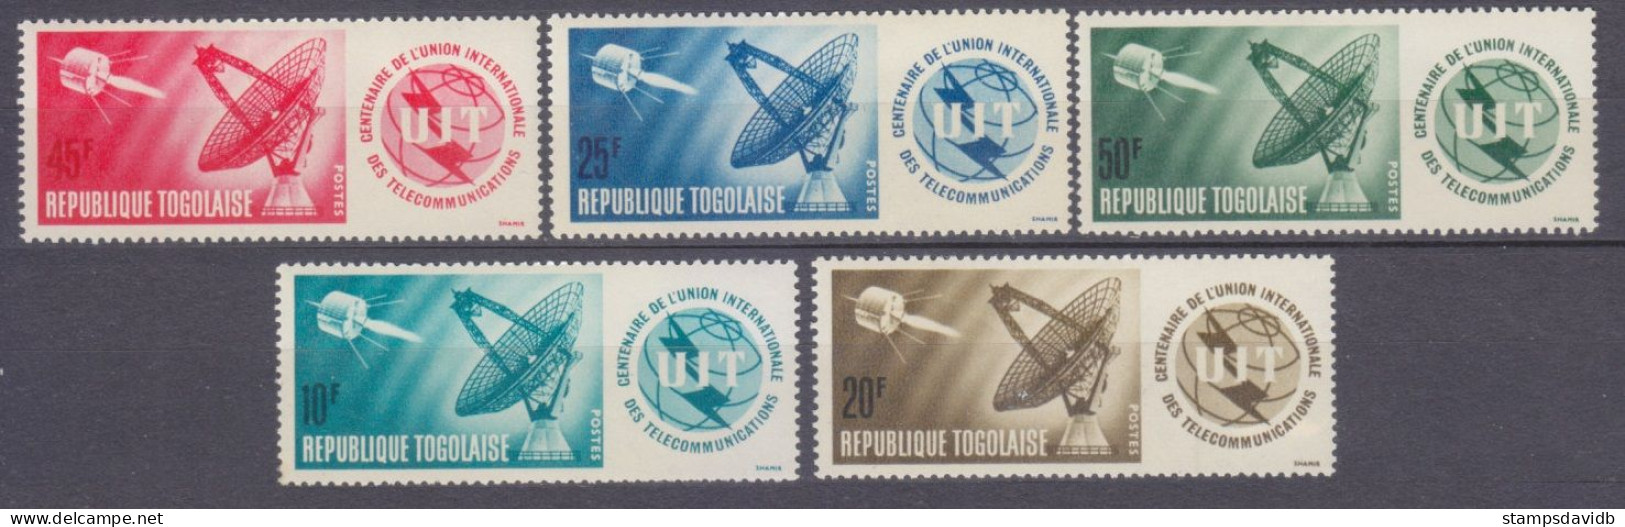 1965 Togo 457-461 100 Years Of ITU - UPU (Unión Postal Universal)